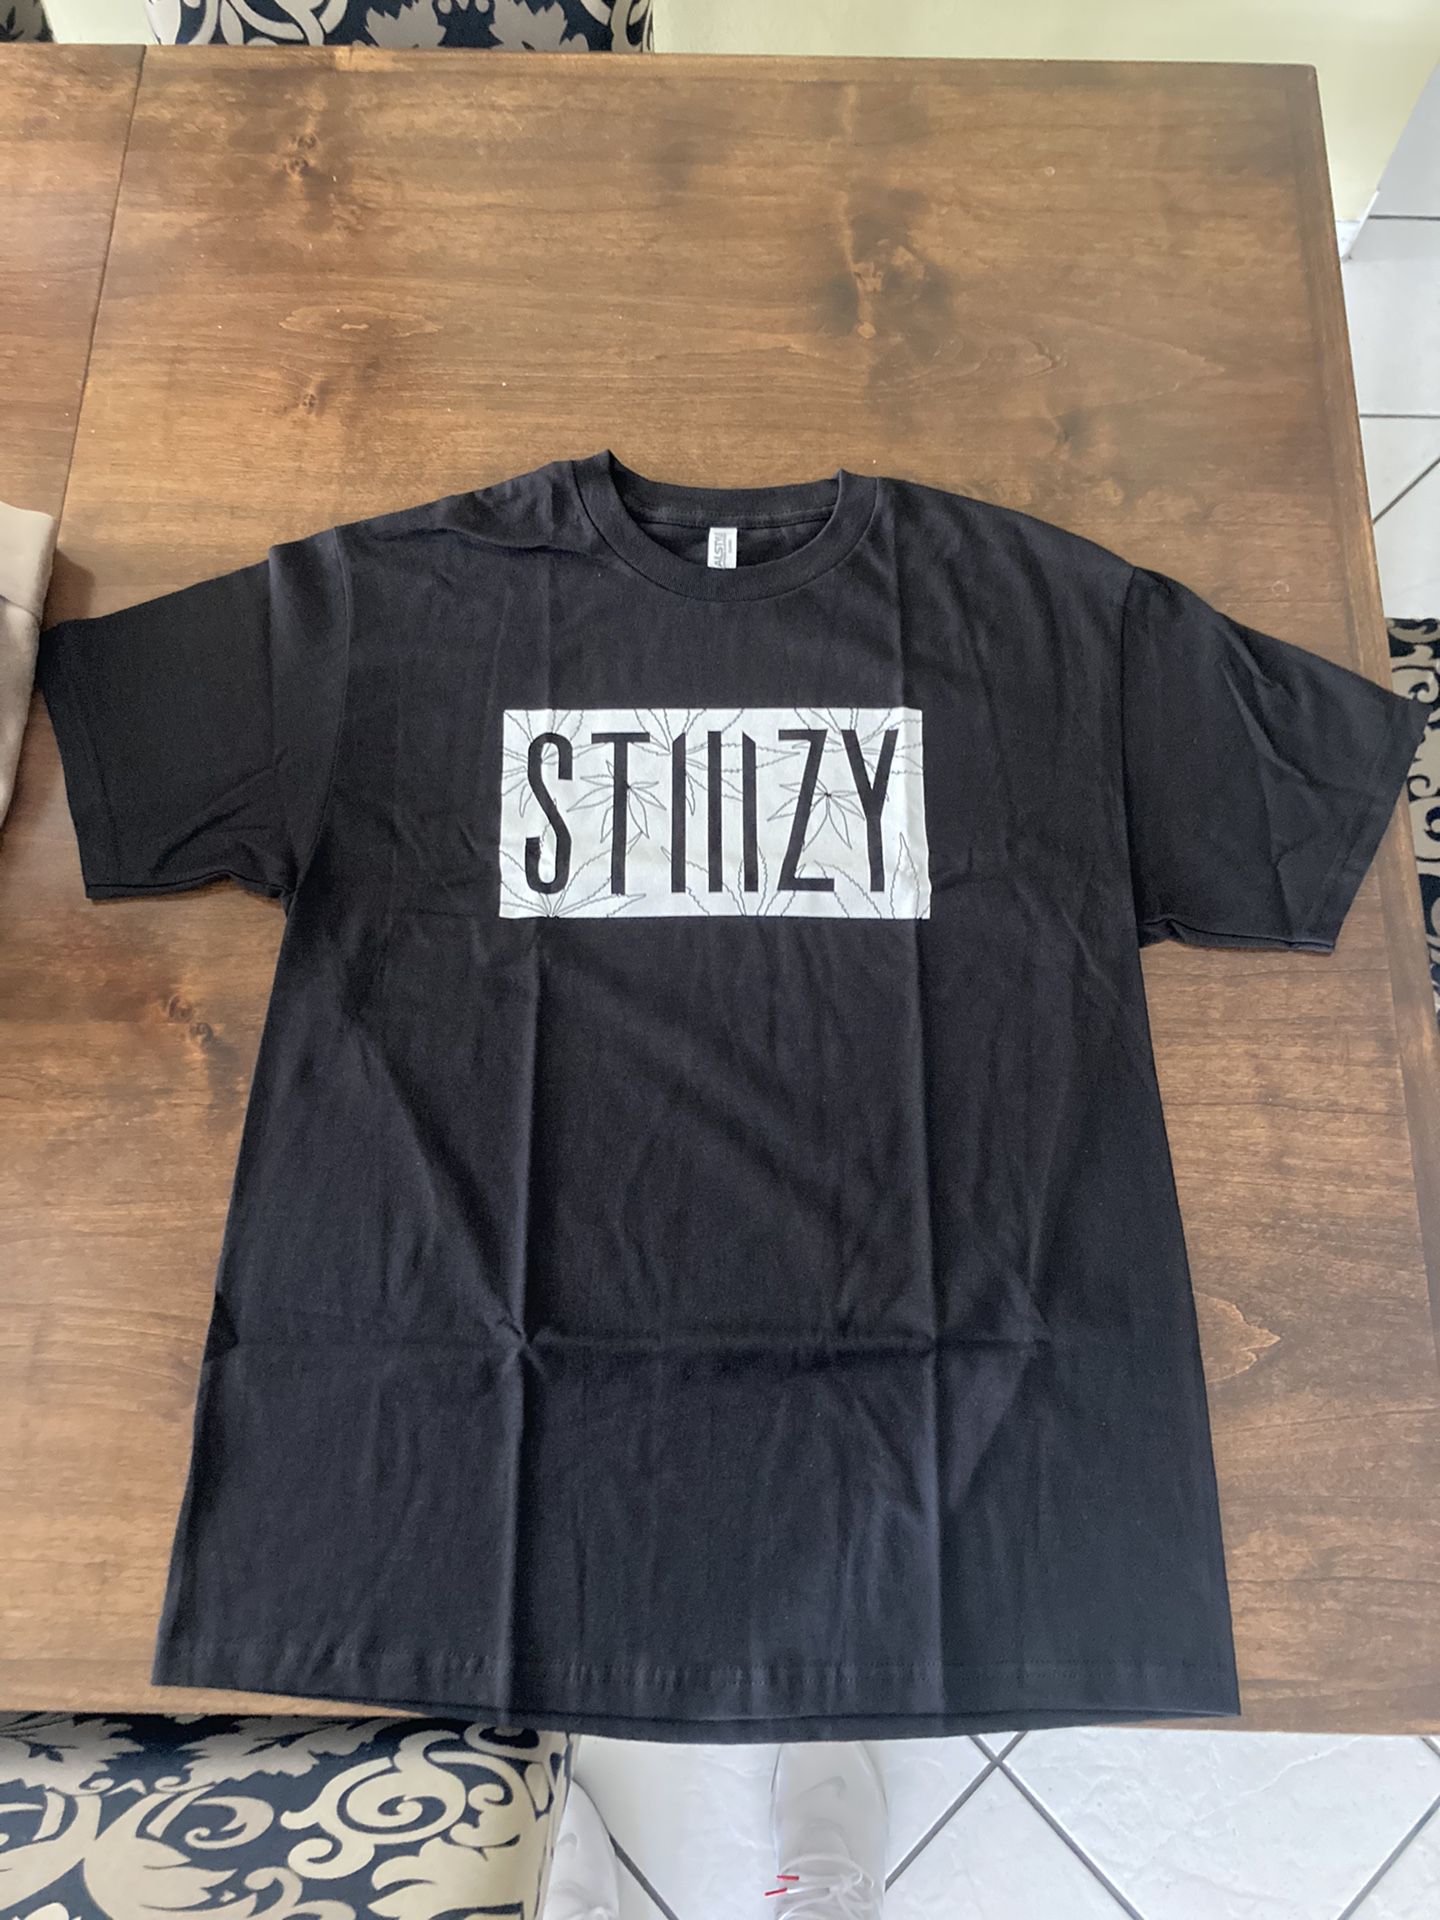 STIIIZY shirt for Sale in La Mirada, CA - OfferUp